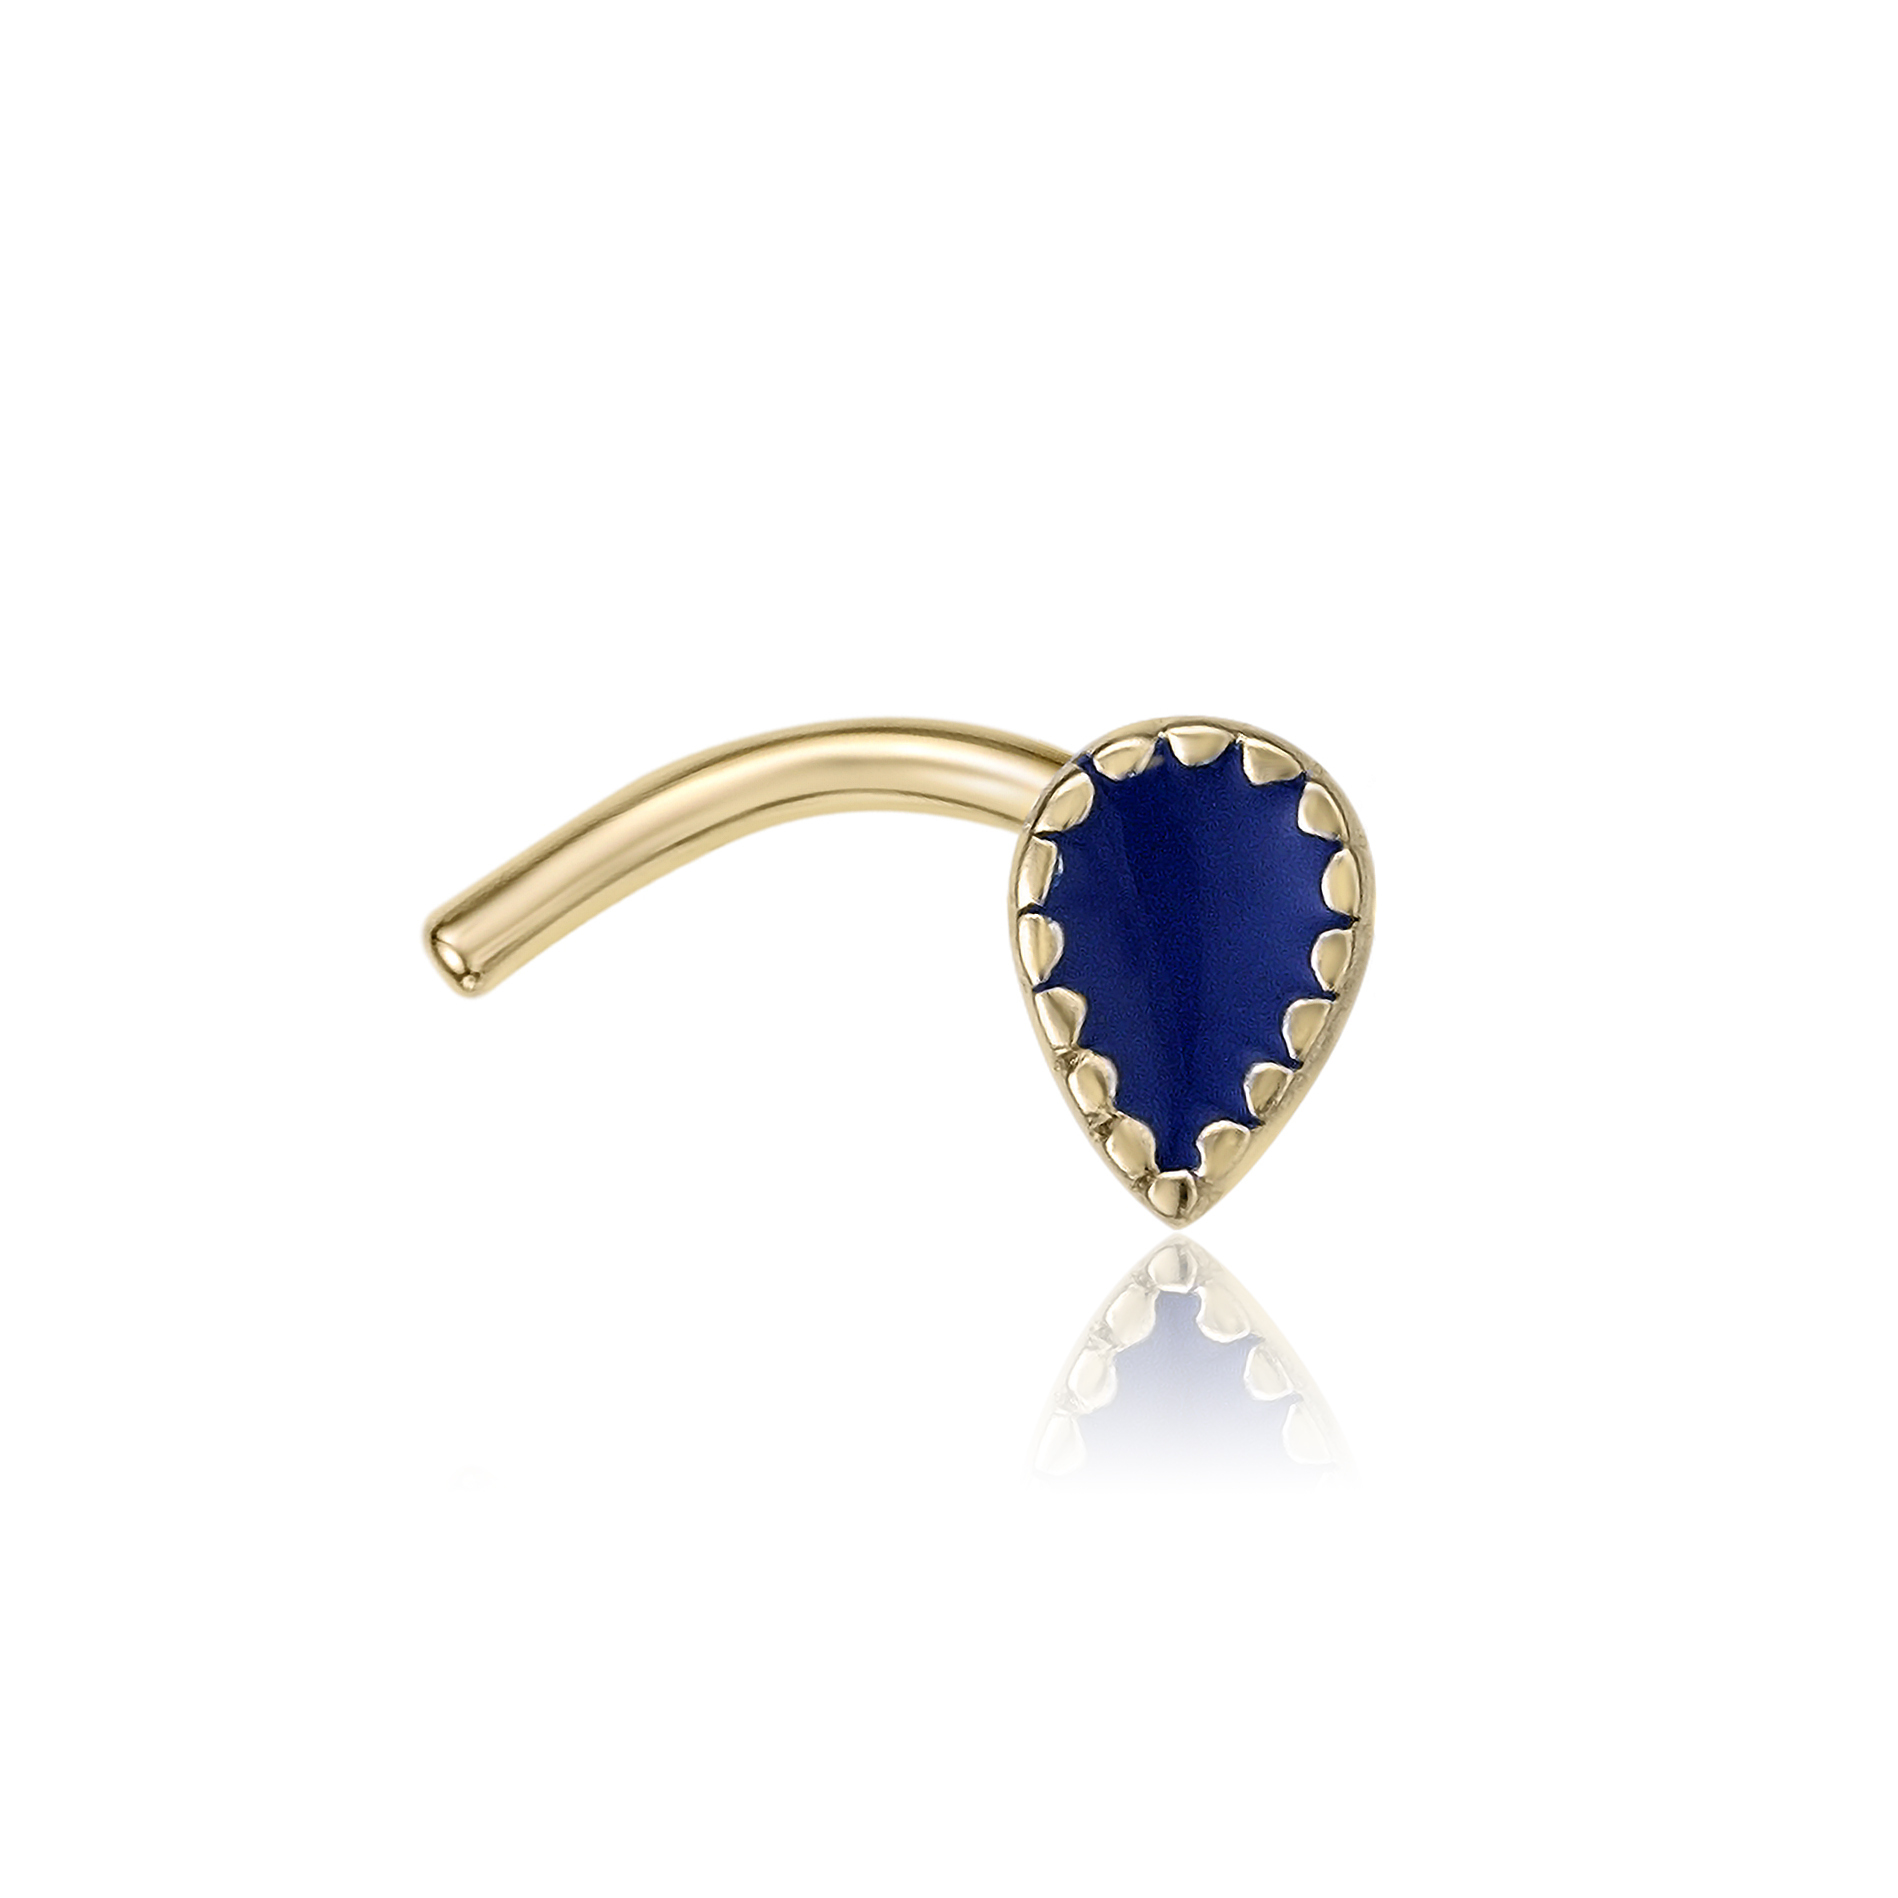 Lavari Jewelers Women's 4.2 MM Blue Enamel Raindrop Curved Nose Ring, 14K Yellow Gold, 20 Gauge